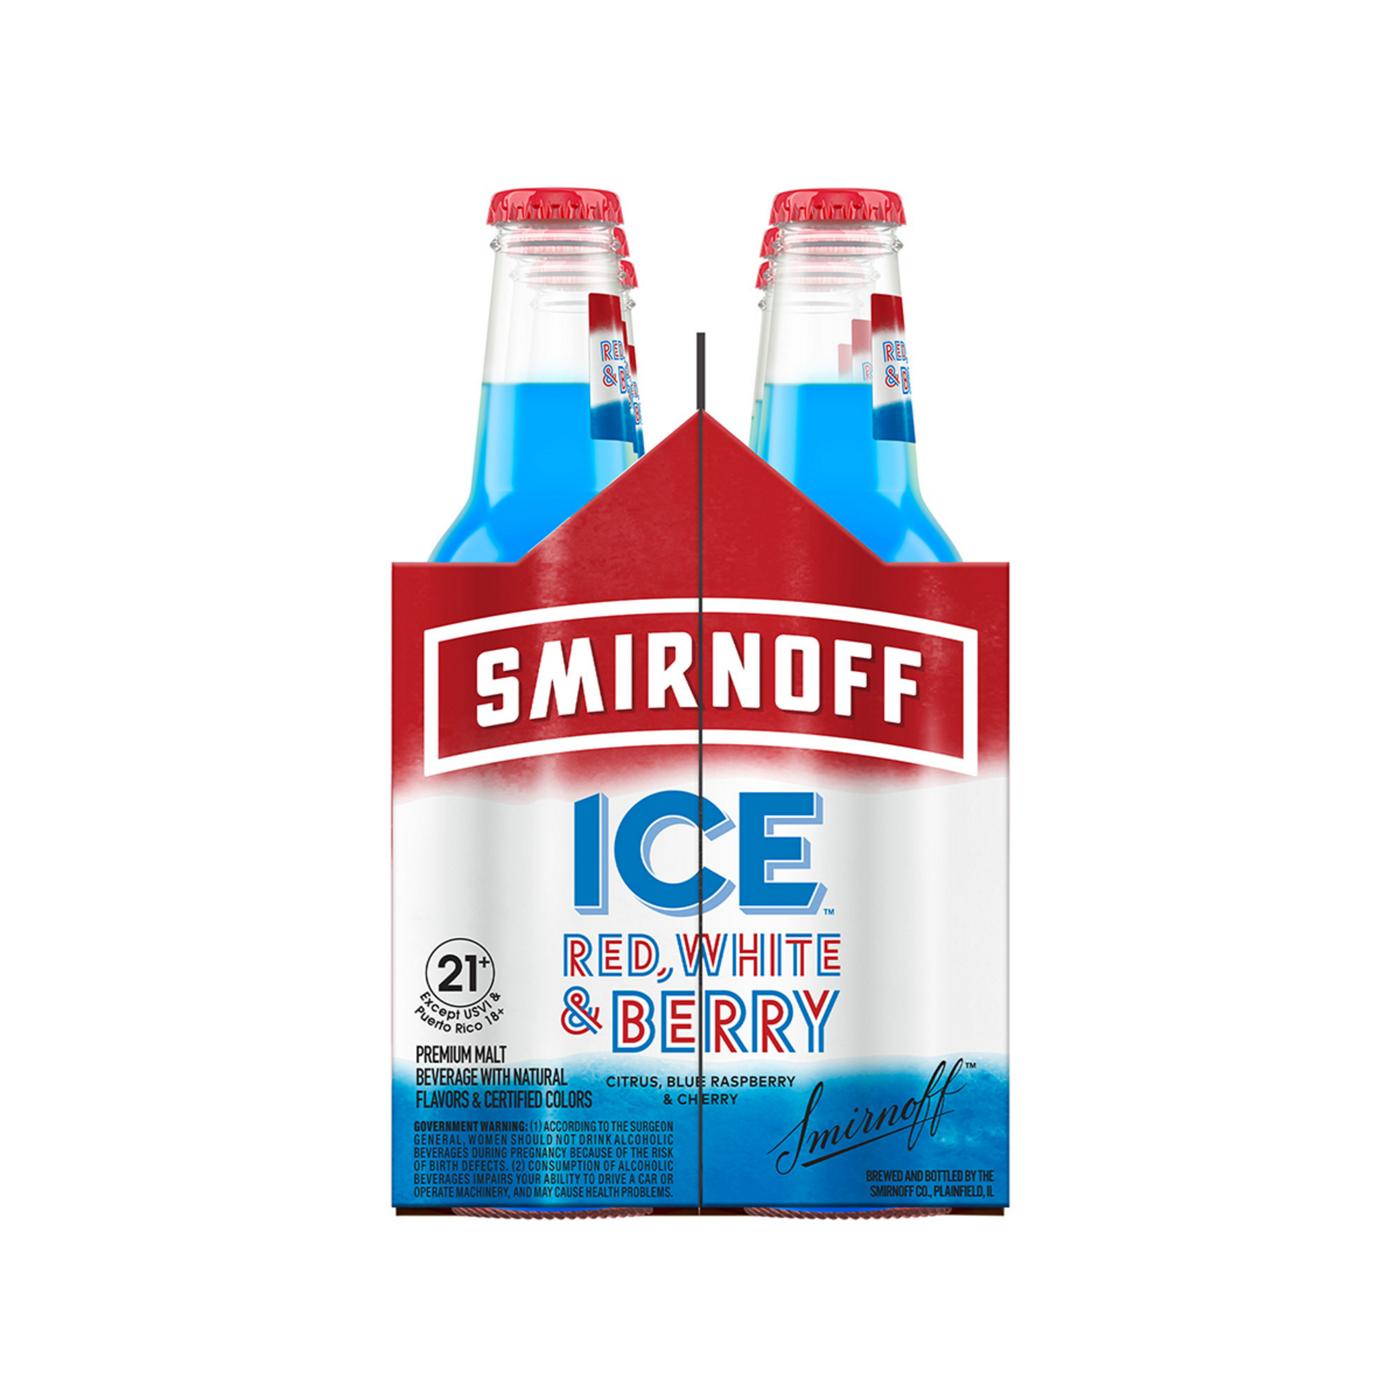 Smirnoff Ice Red, White, Berry; image 3 of 5